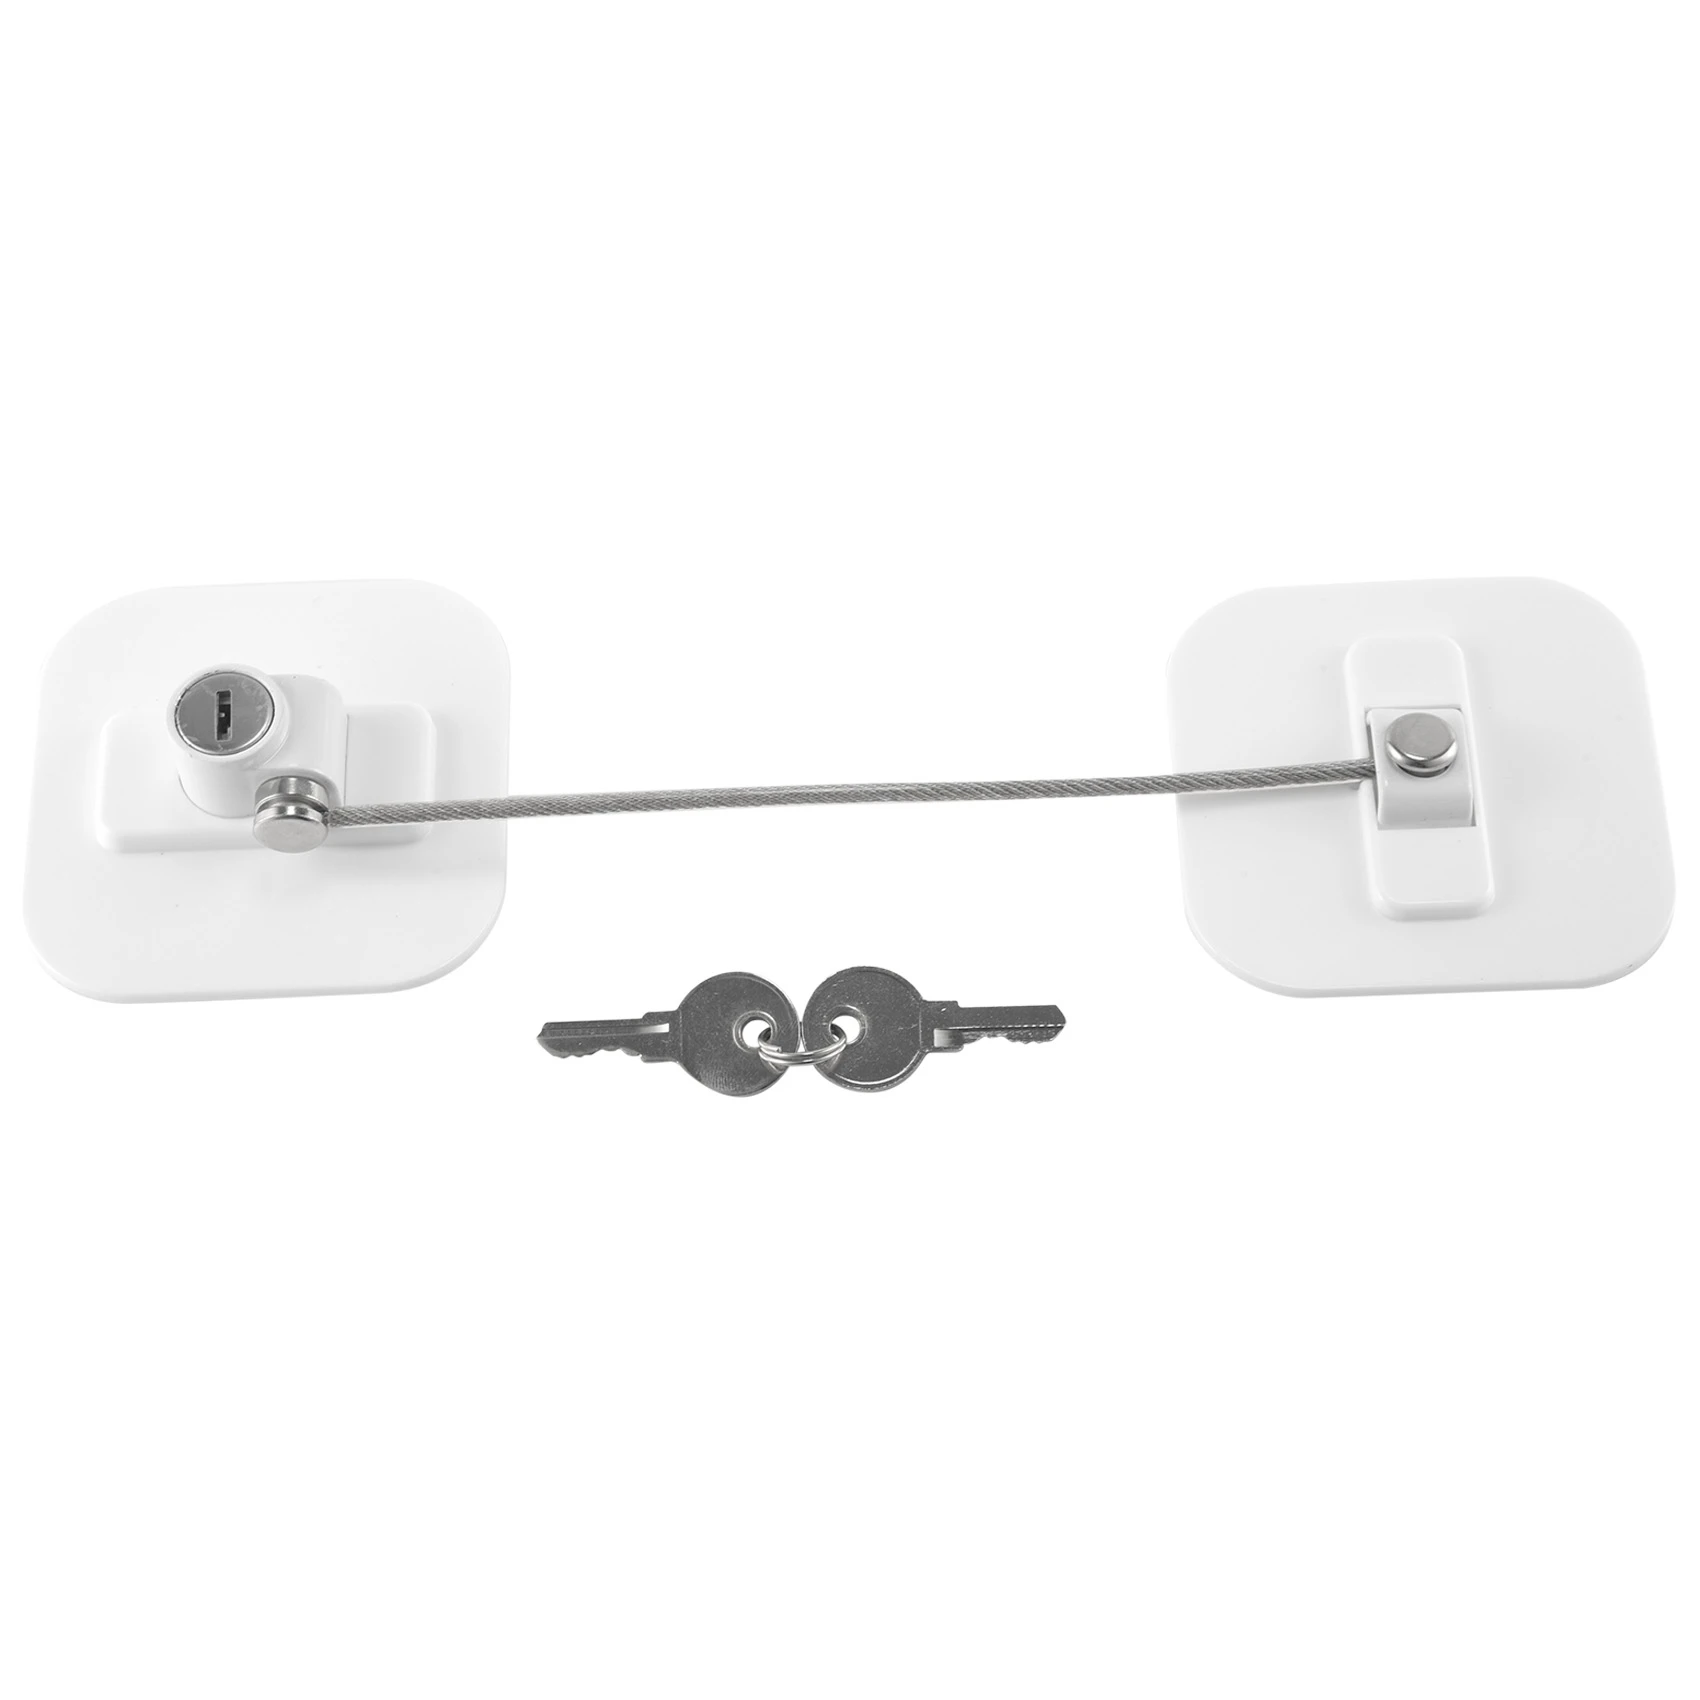 

Fridge Lock,Refrigerator Locks,Freezer Lock with Key for Child Safety,Locks to Lock Fridge and Cabinets-1Pack